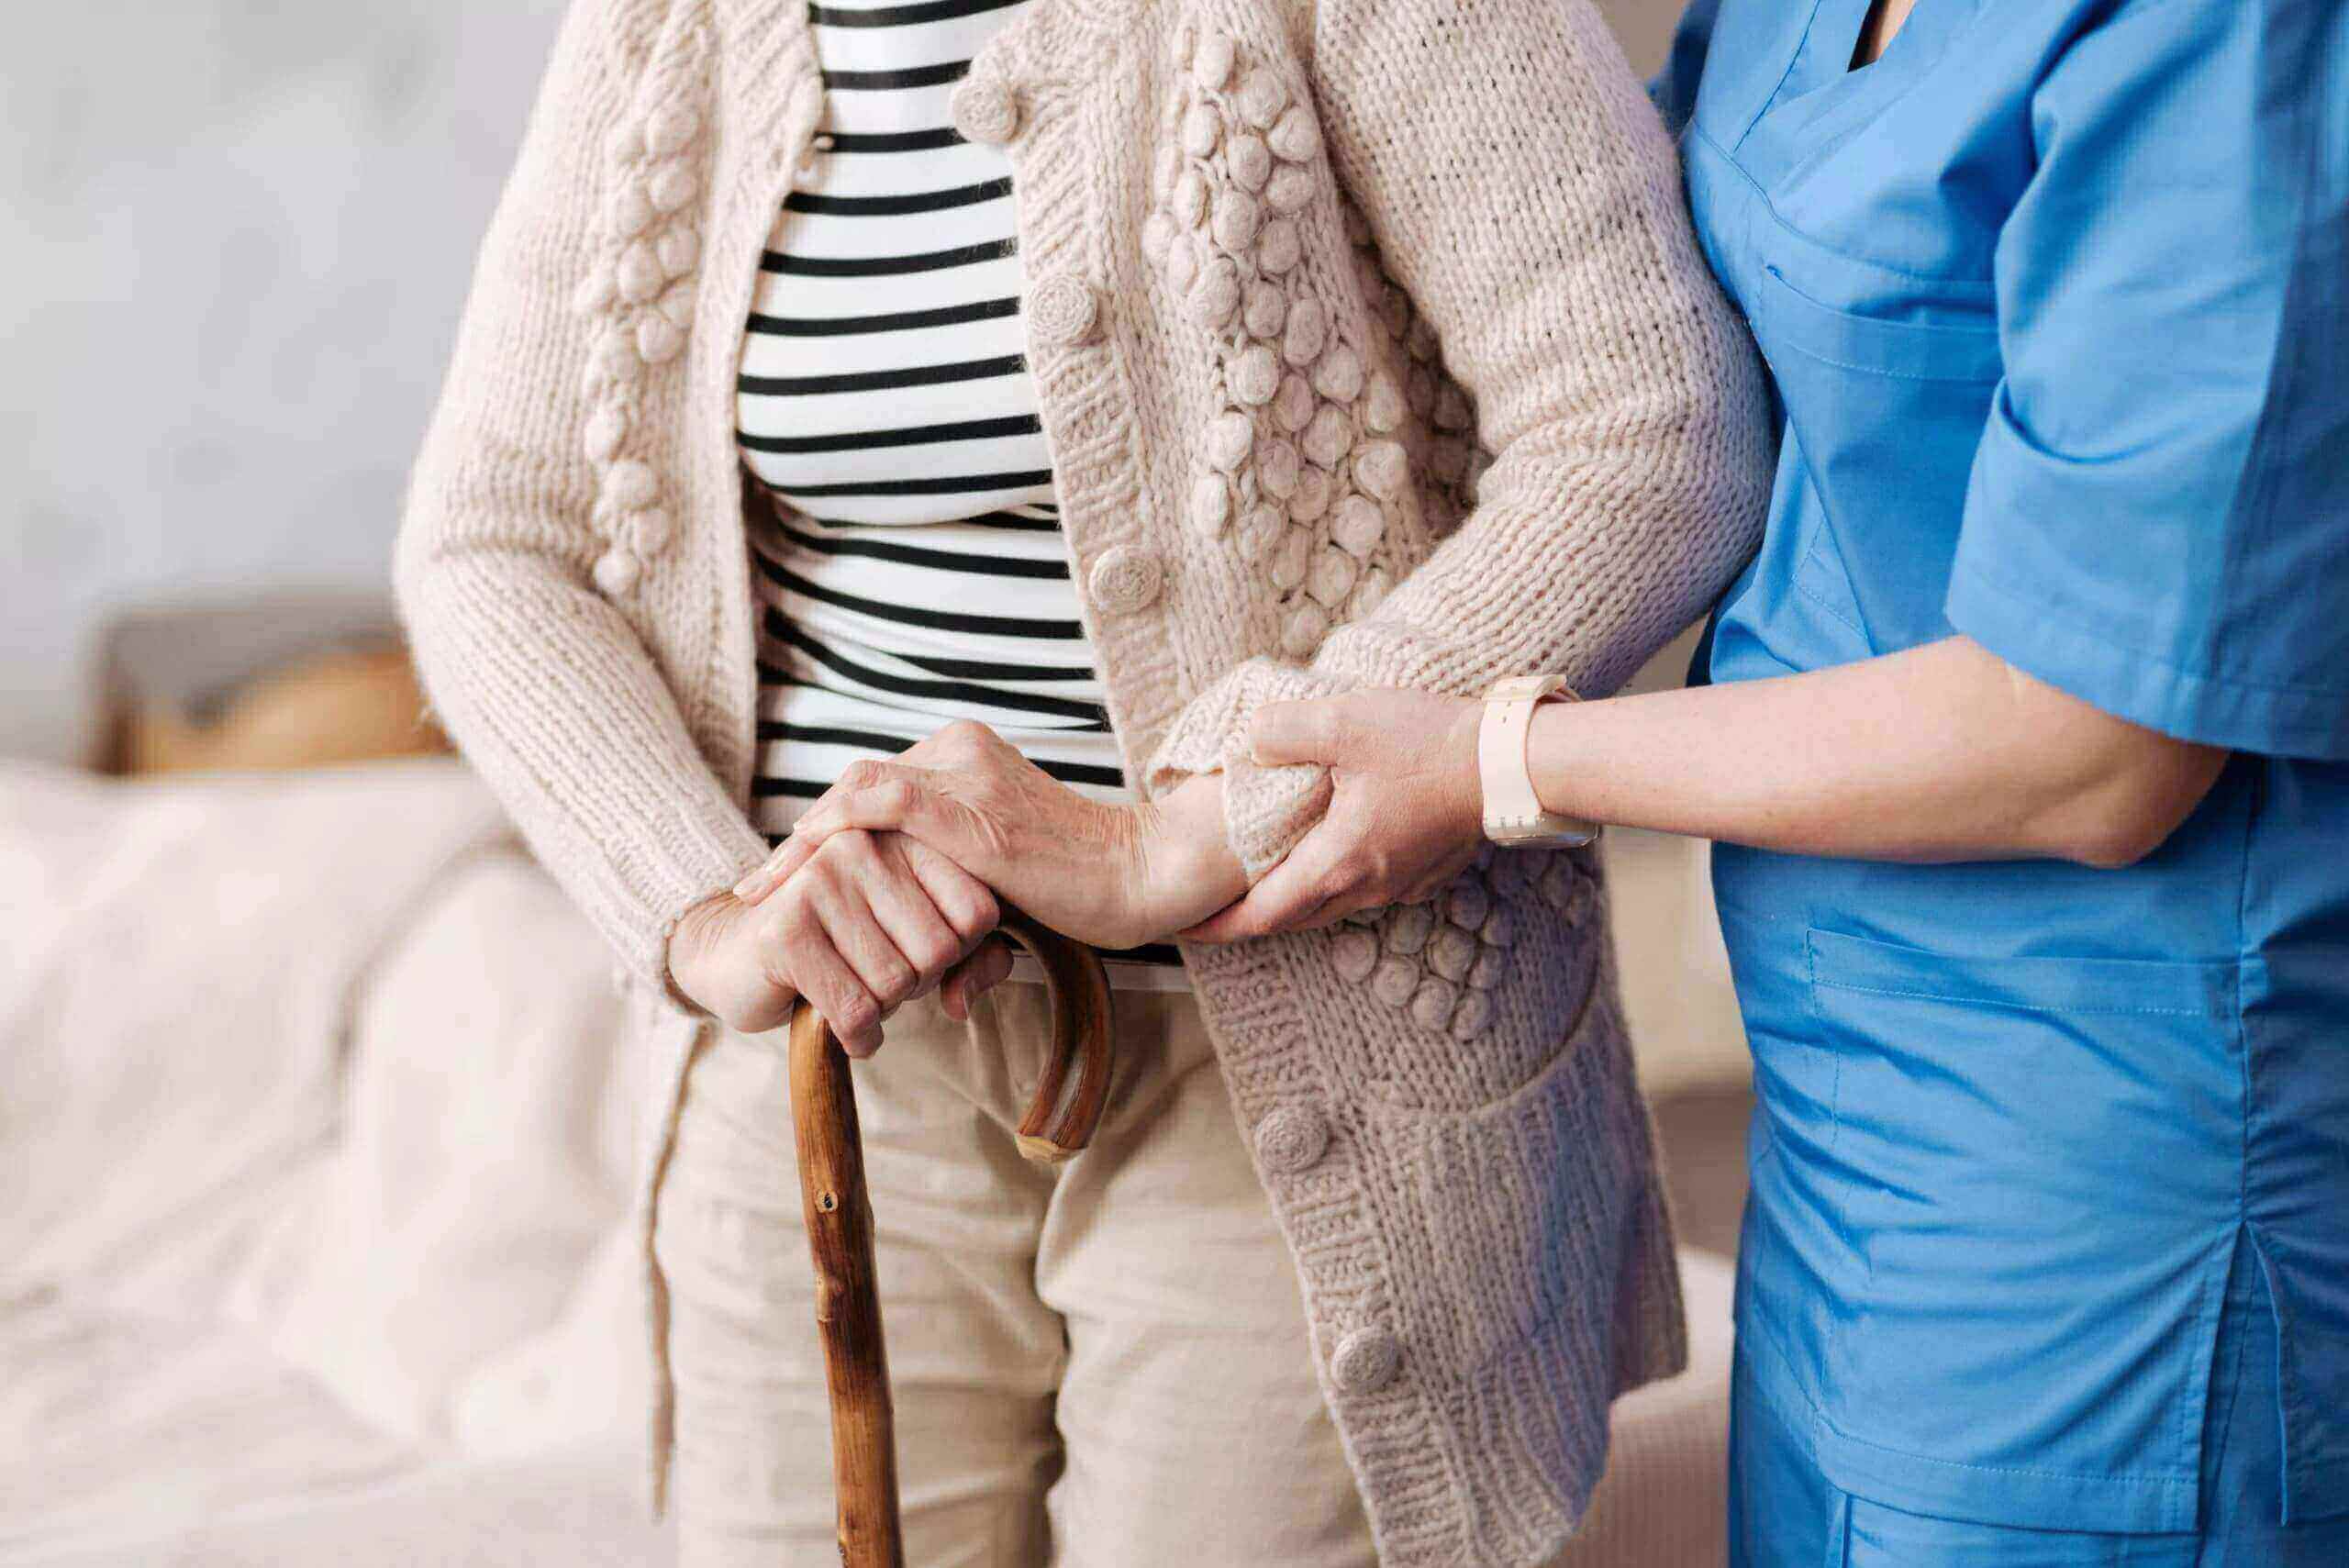 An elderly lady being helped by a nurse